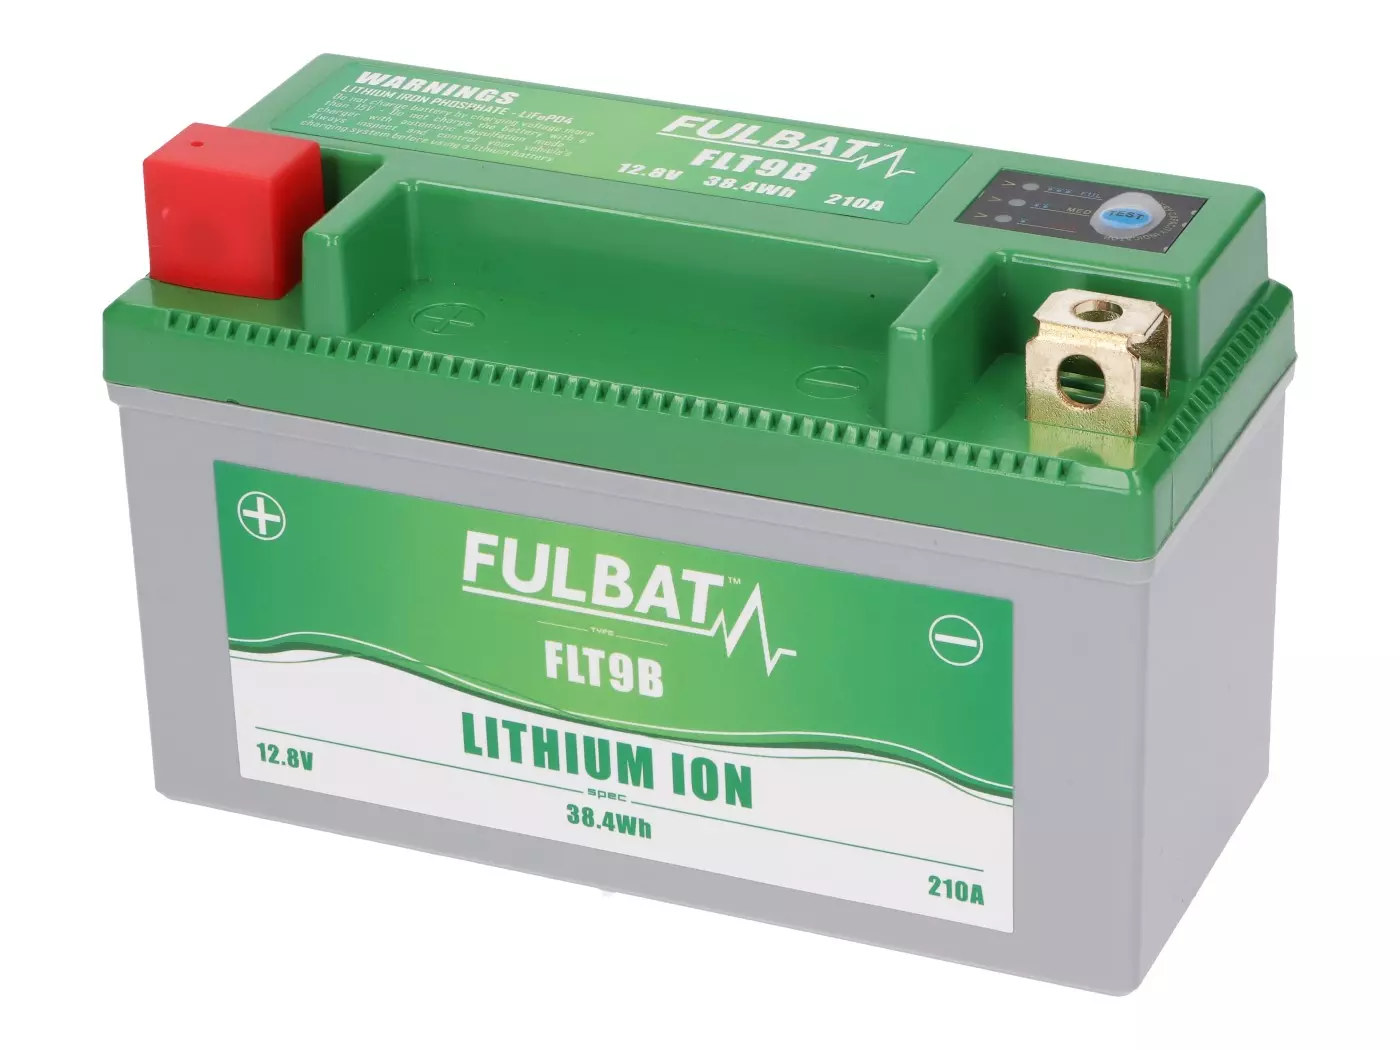 Battery Fulbat FLT9B LITHIUM ION M/C